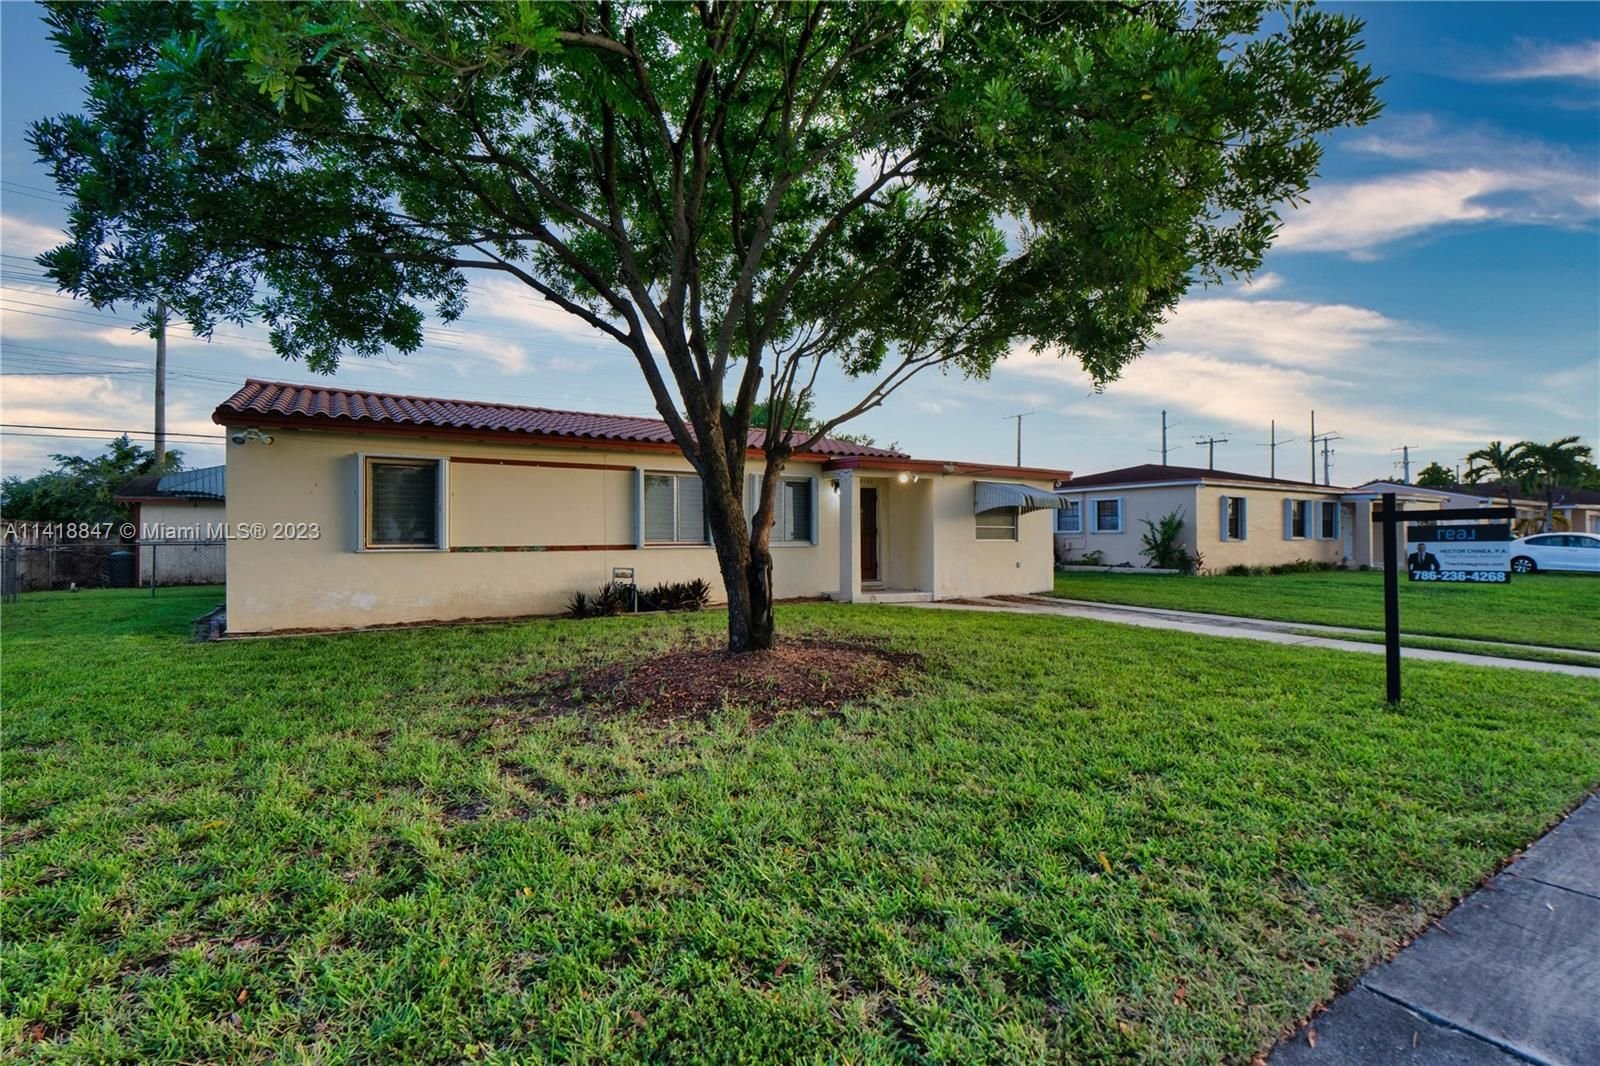 Real estate property located at 10100 35 Terrace, Miami-Dade County, Miami, FL